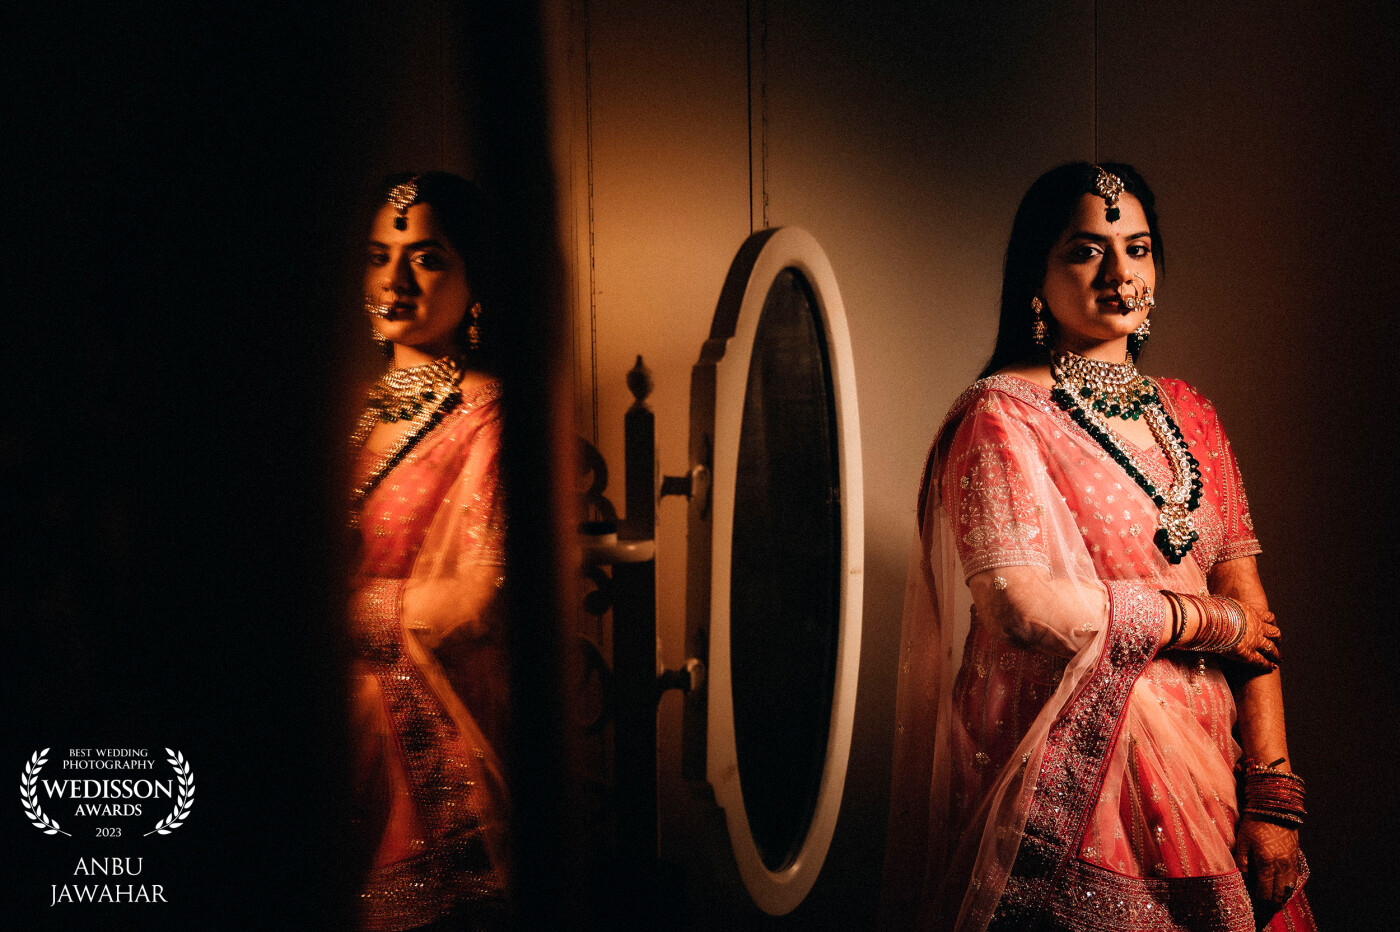 Portrait of Amrutha, Shot just before the Baraath / Jaymala ceremony in Bangalore, Karnataka, India. Shot with a single light source and she was posing elegantly.